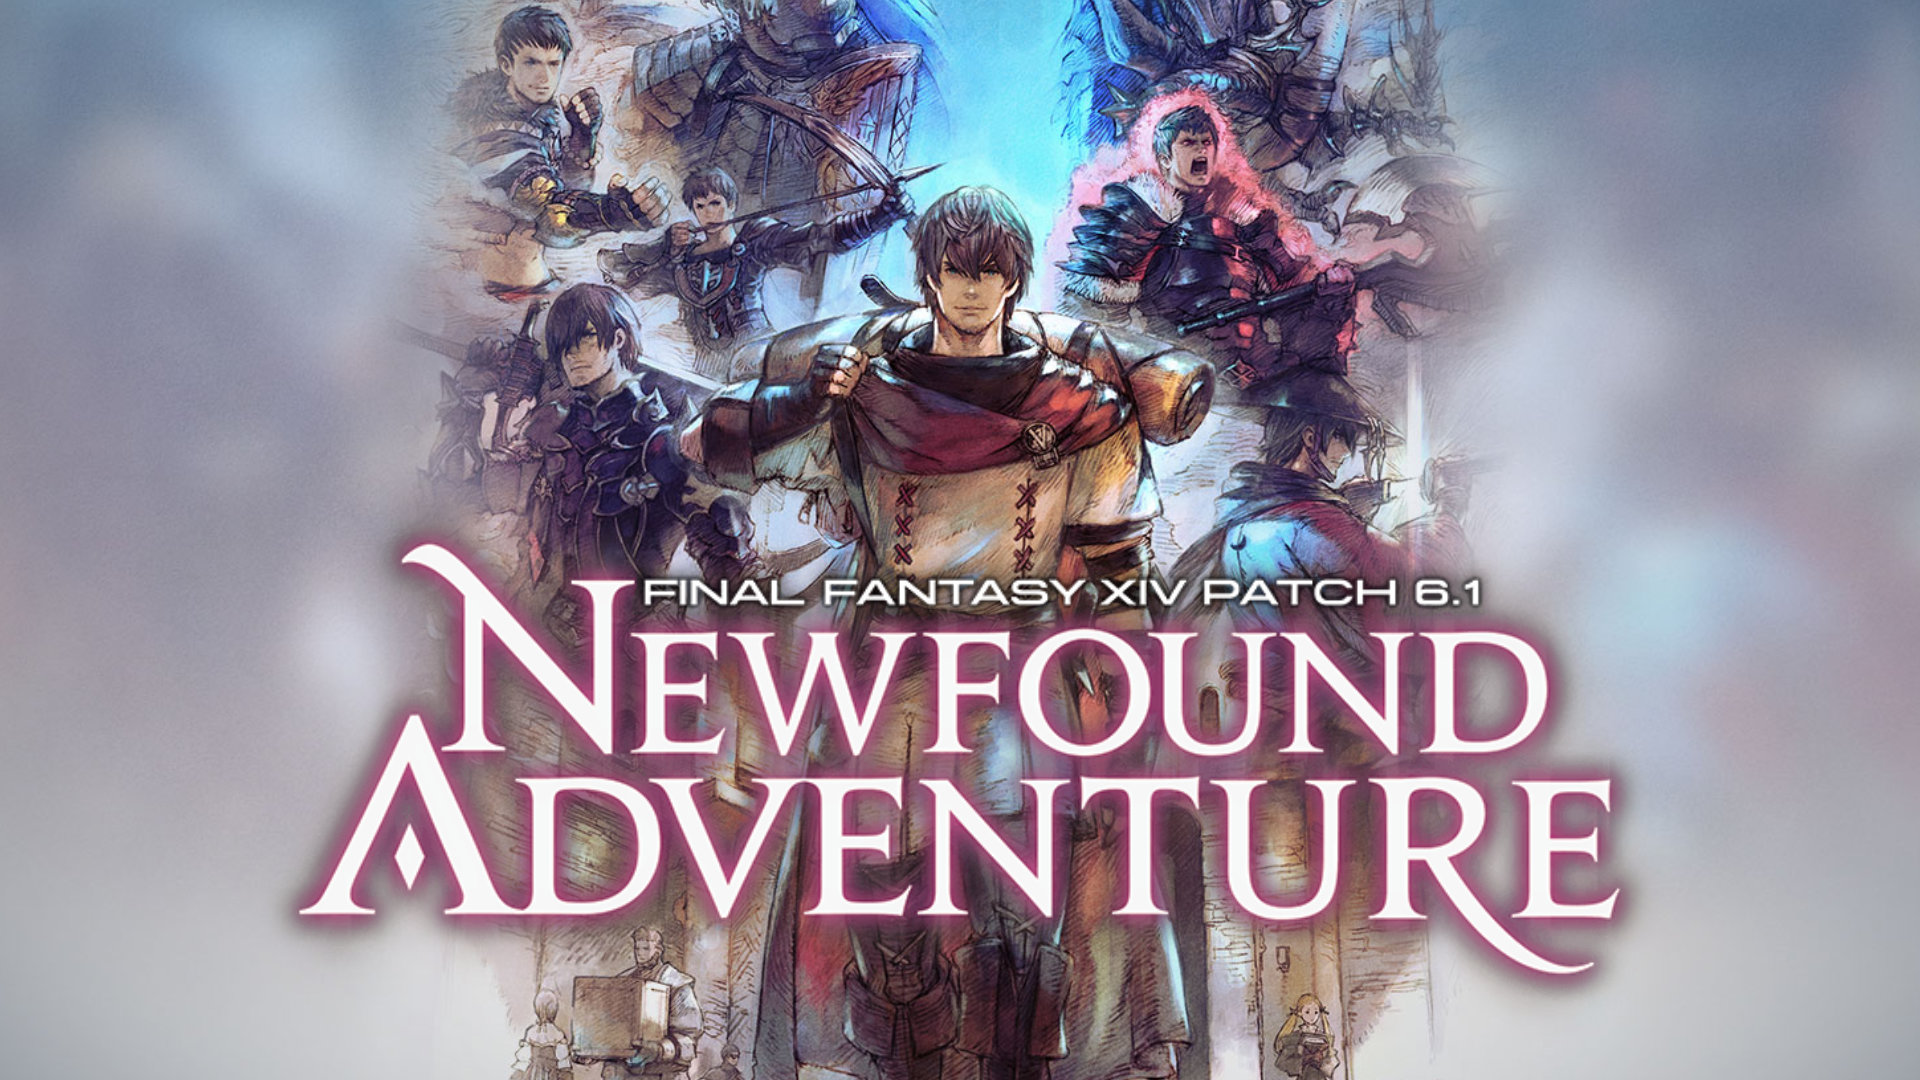 Final Fantasy XIV Patch 6.1 Newfound Adventure Key Art